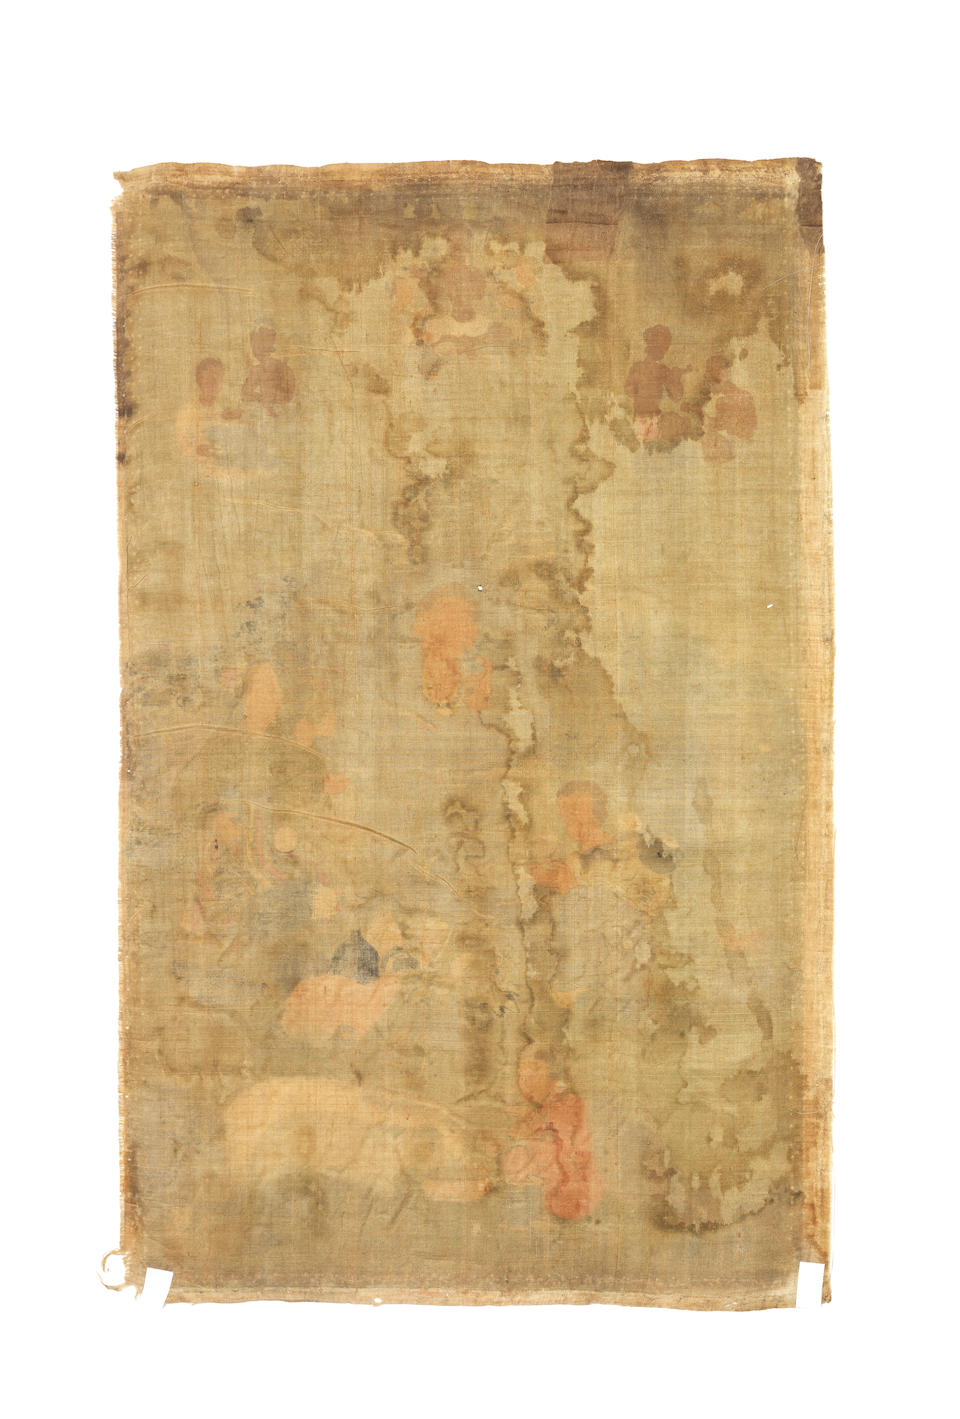 THE TENTH KARMAPA CHOYING DORJE (1604-1674) Marpa Receives The Poet-Saint Milarepa